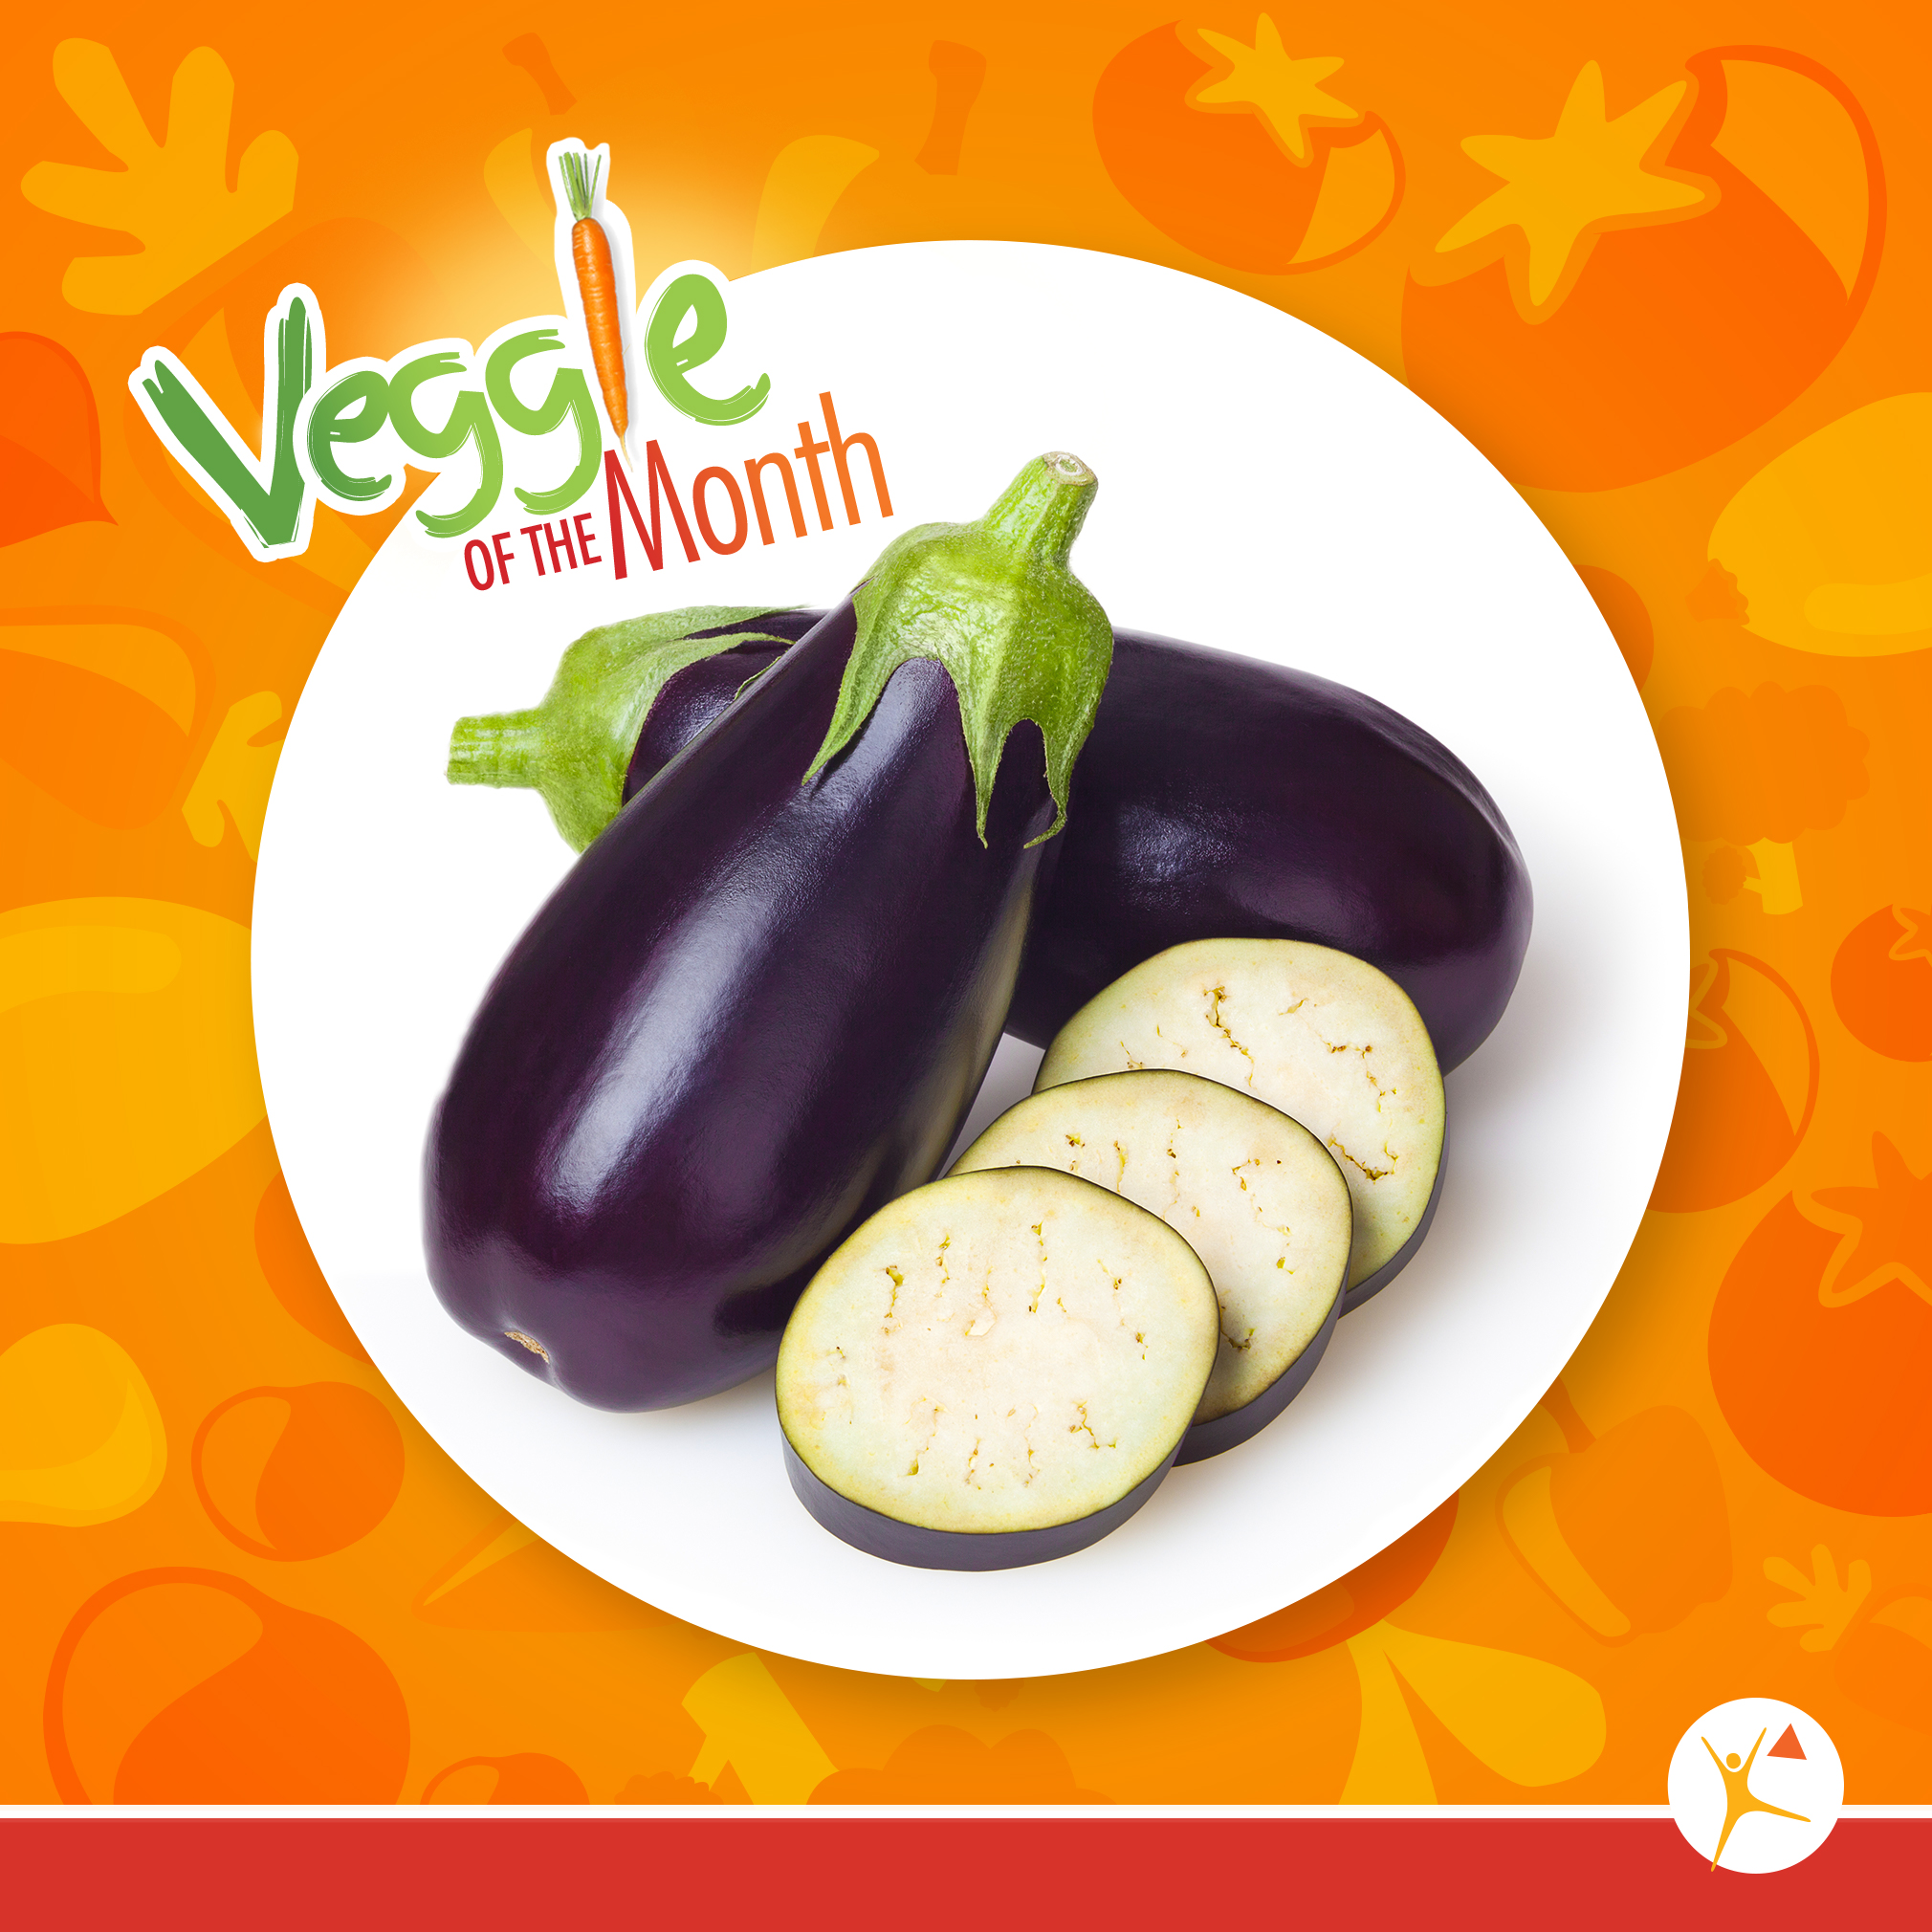 https://healthysd.gov/wp-content/uploads/2022/04/hotm_veggie_of_the_month_eggplant.jpg